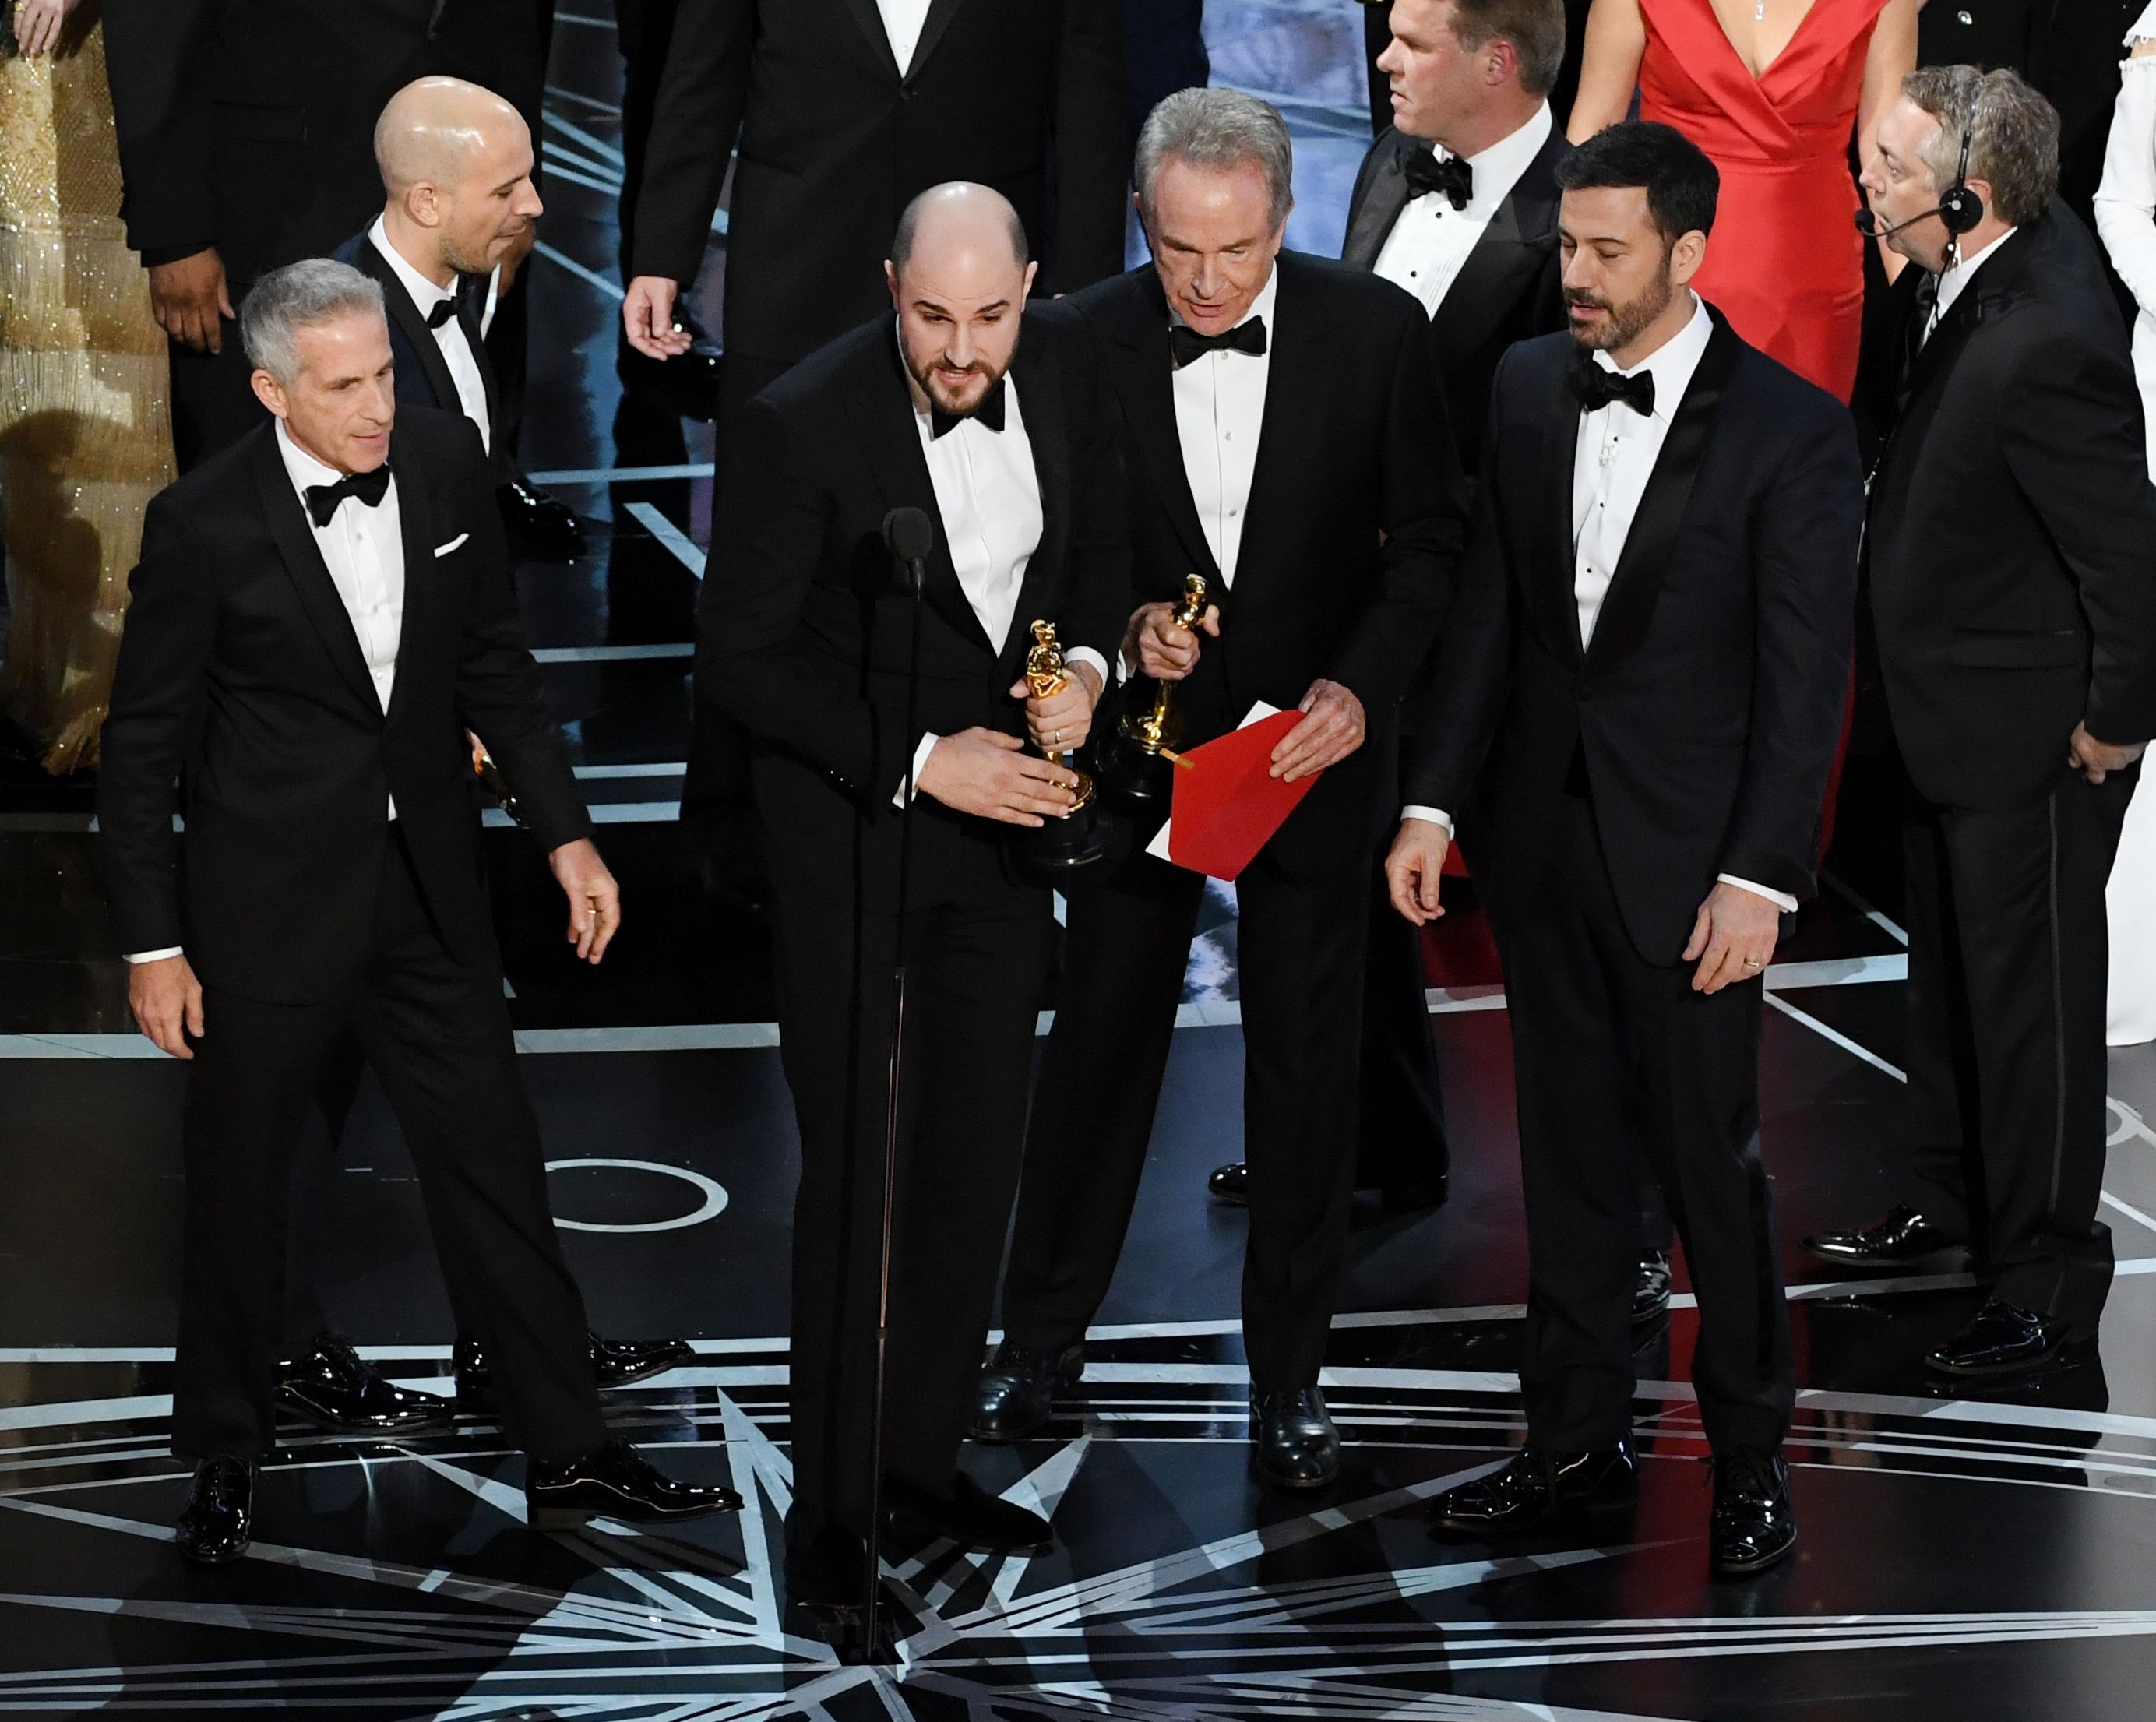 Why 'La La Land' Will Win Best Picture at Oscars Despite Backlash